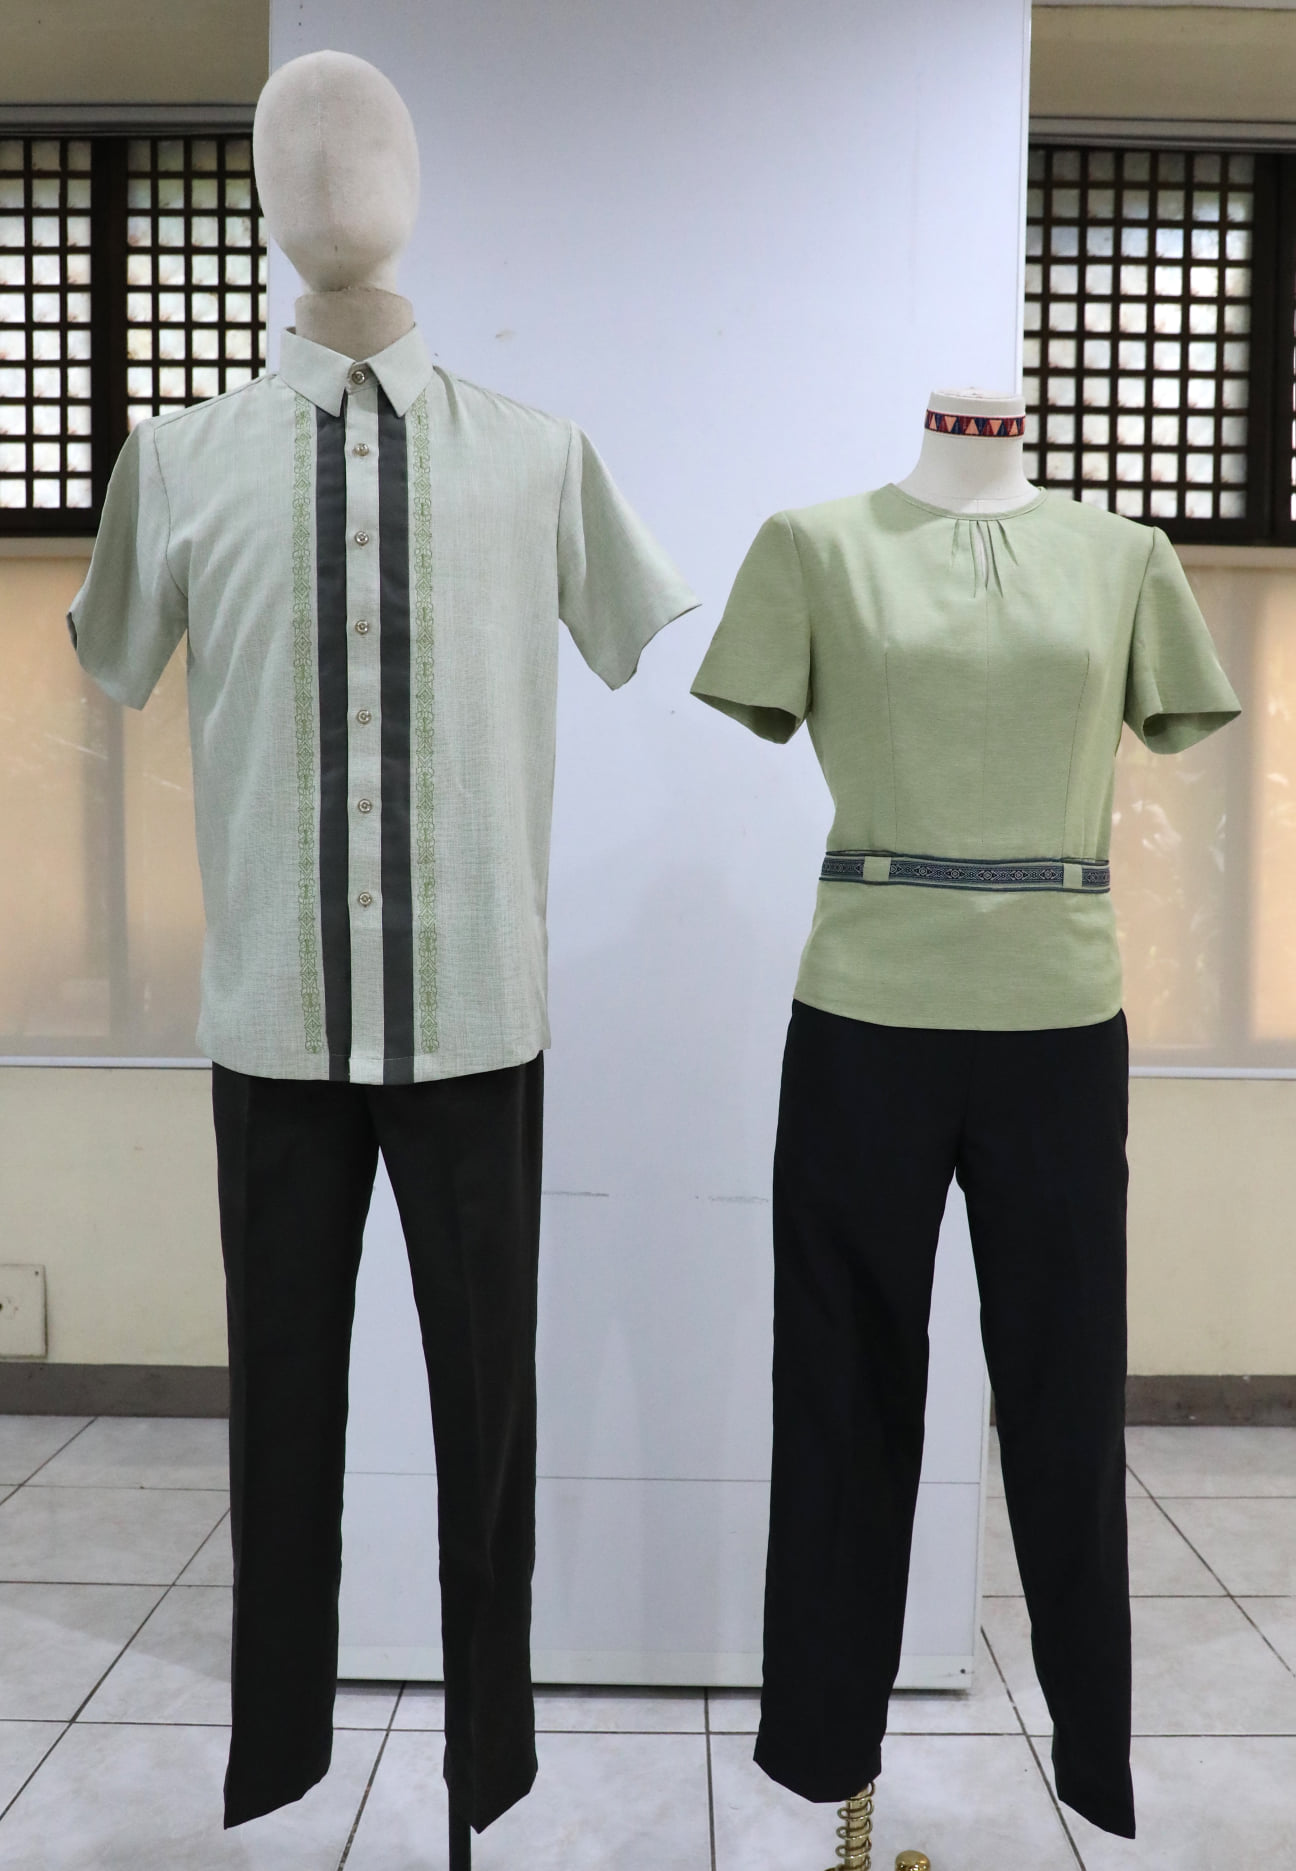 Look Leaked Photos Of New Deped Uniform 2020 Designs Depedtambayanph ...